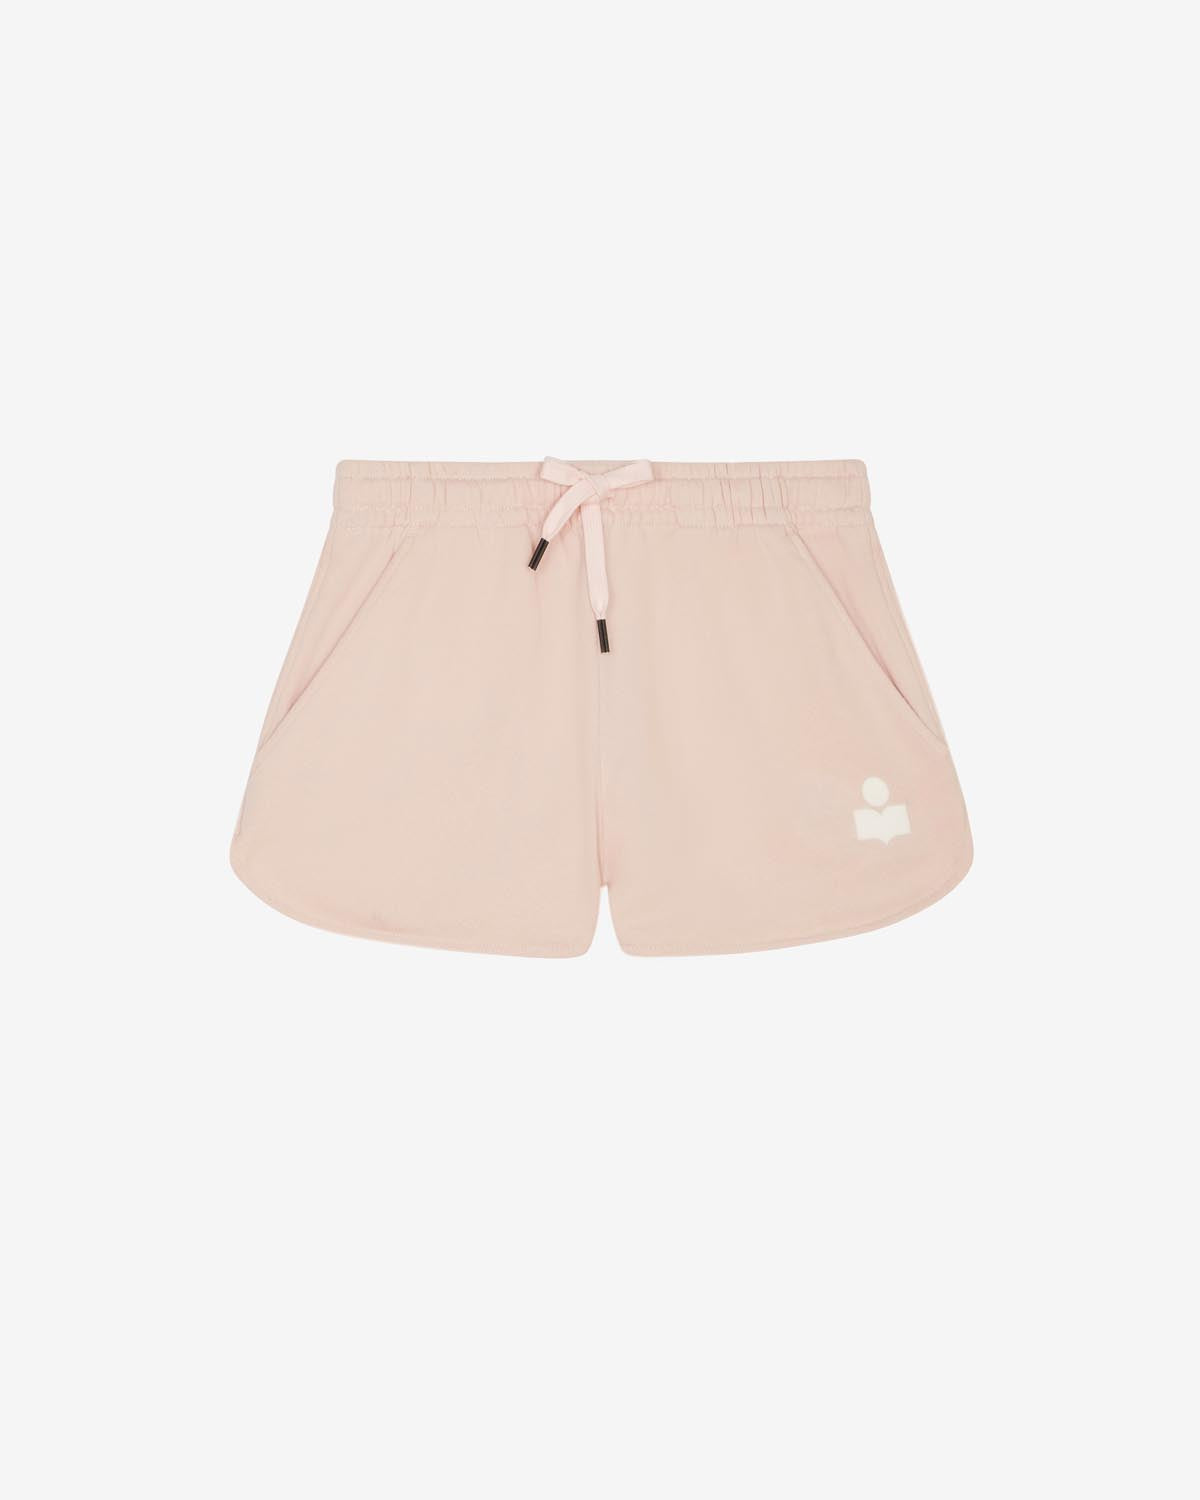 Mifa shorts Woman Pearl rose-ecru 2